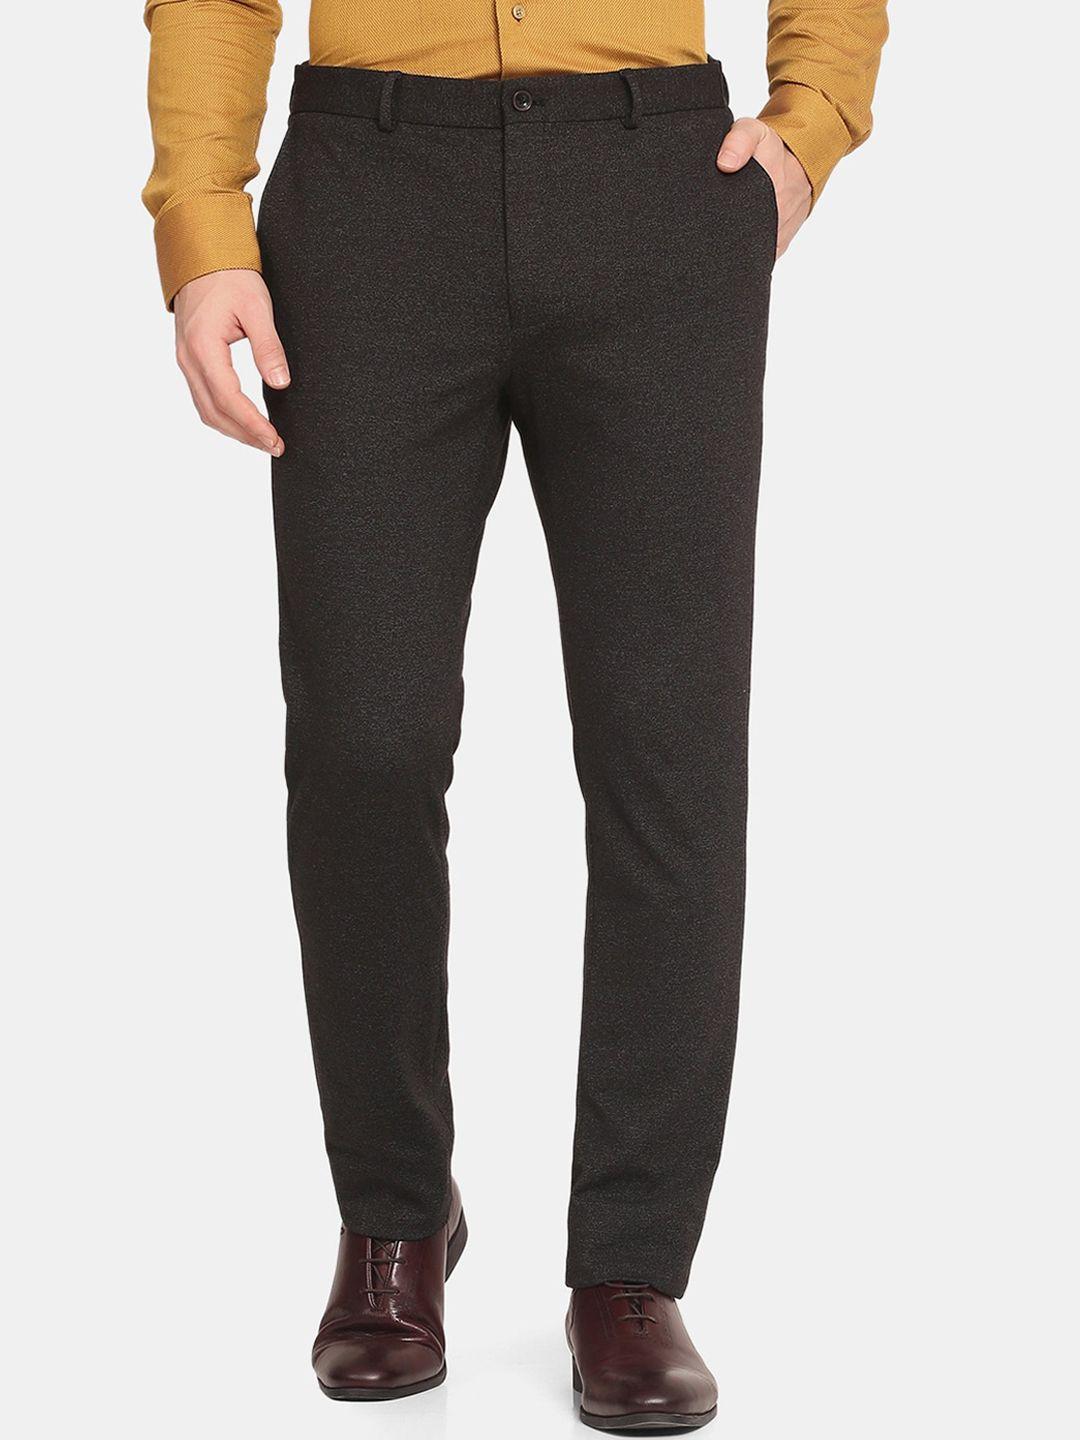 blackberrys-men-charcoal-slim-fit-low-rise-trousers